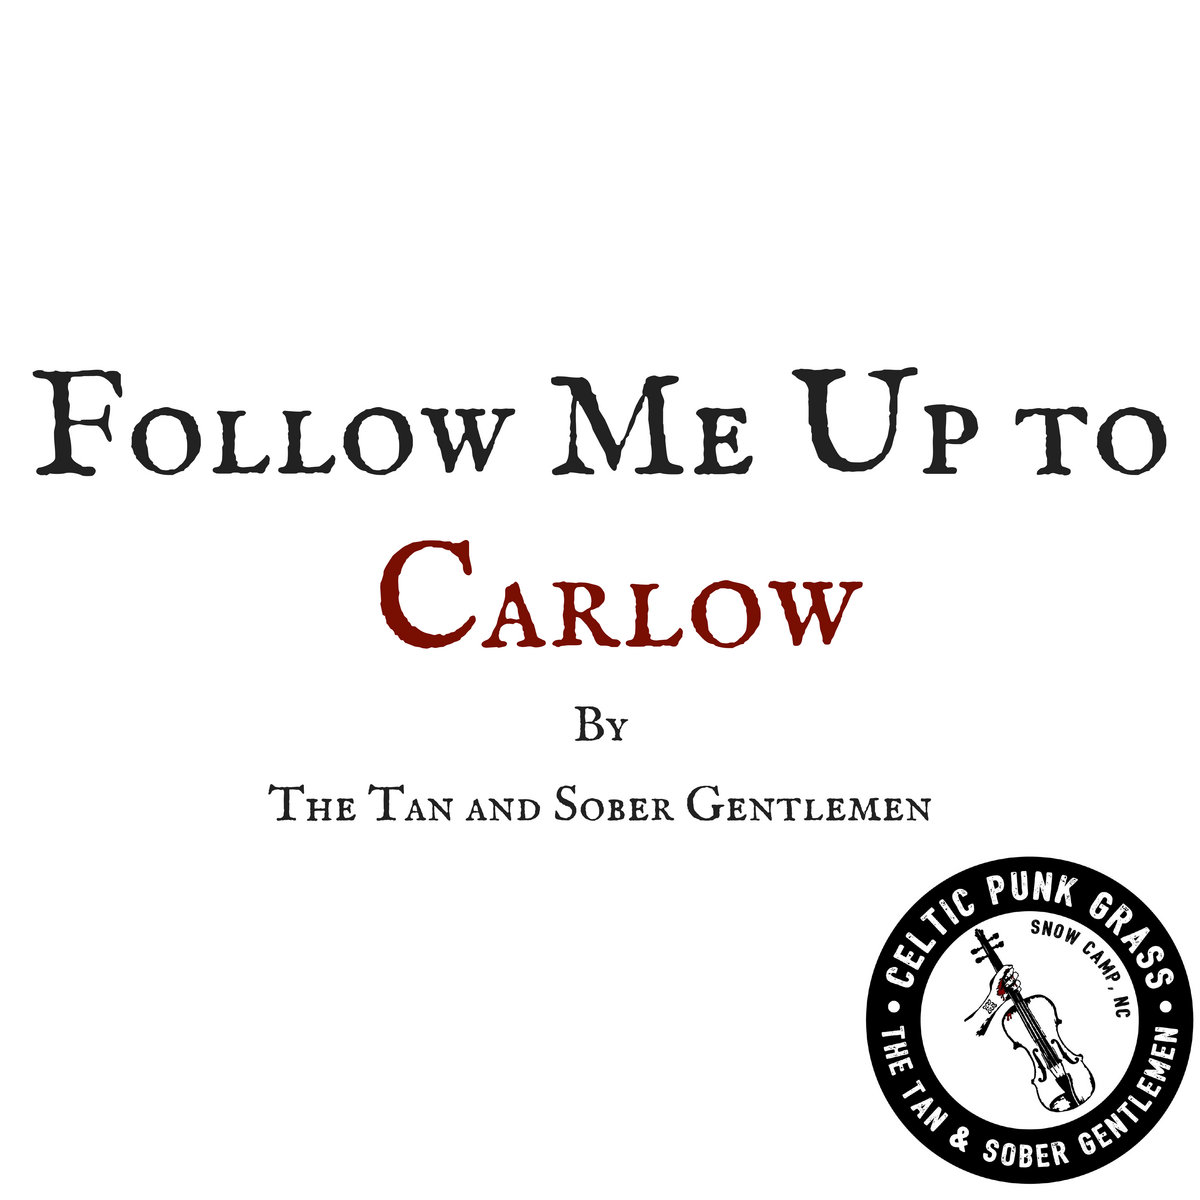 Follow Me Up To Carlow Single The Tan And Sober Gentlemen